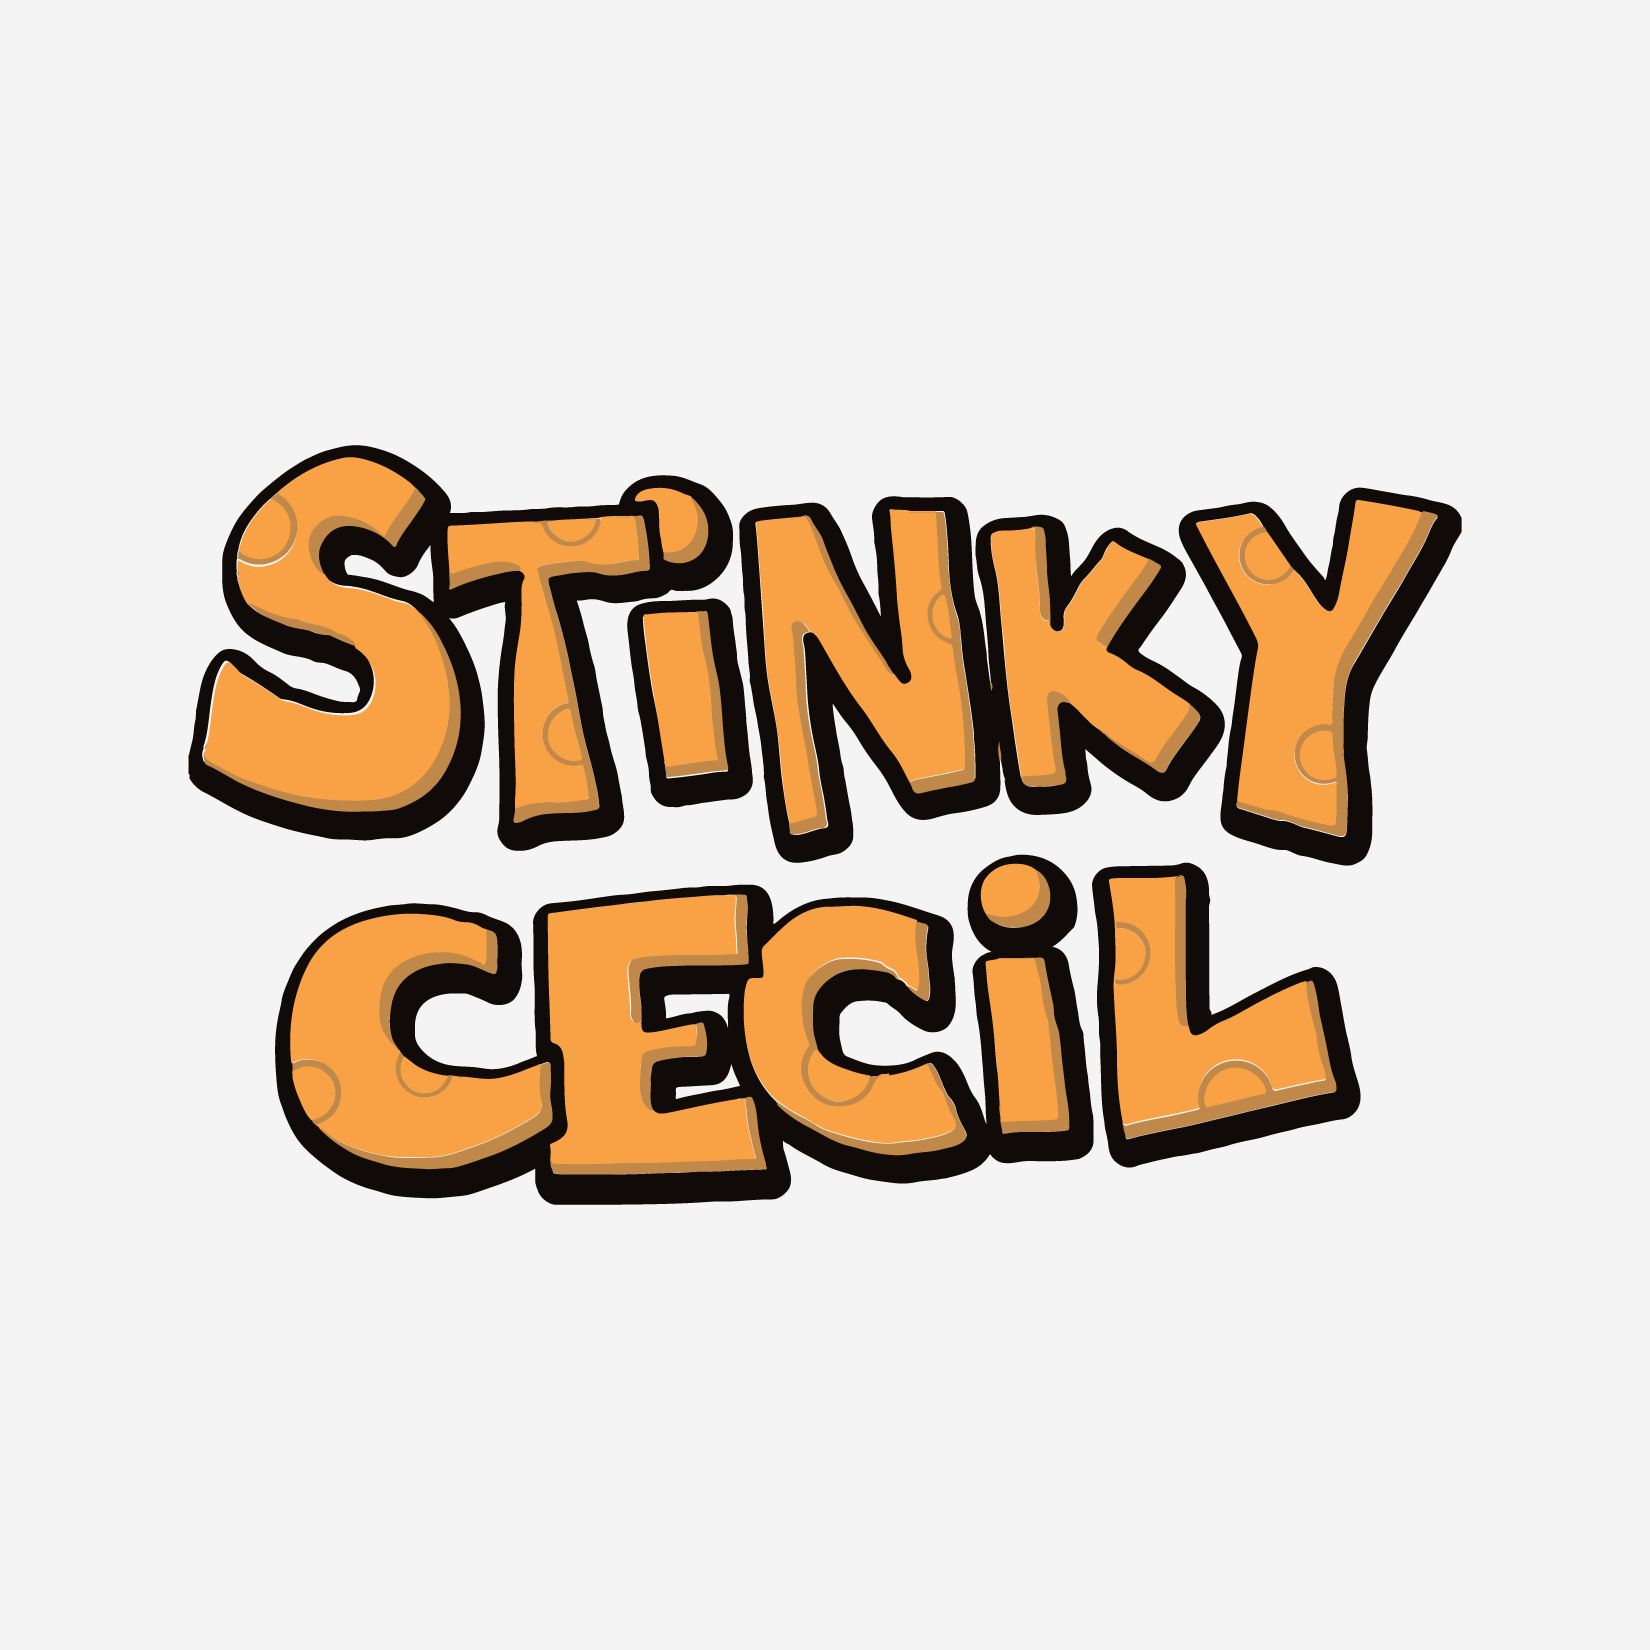 Stinky Cecil